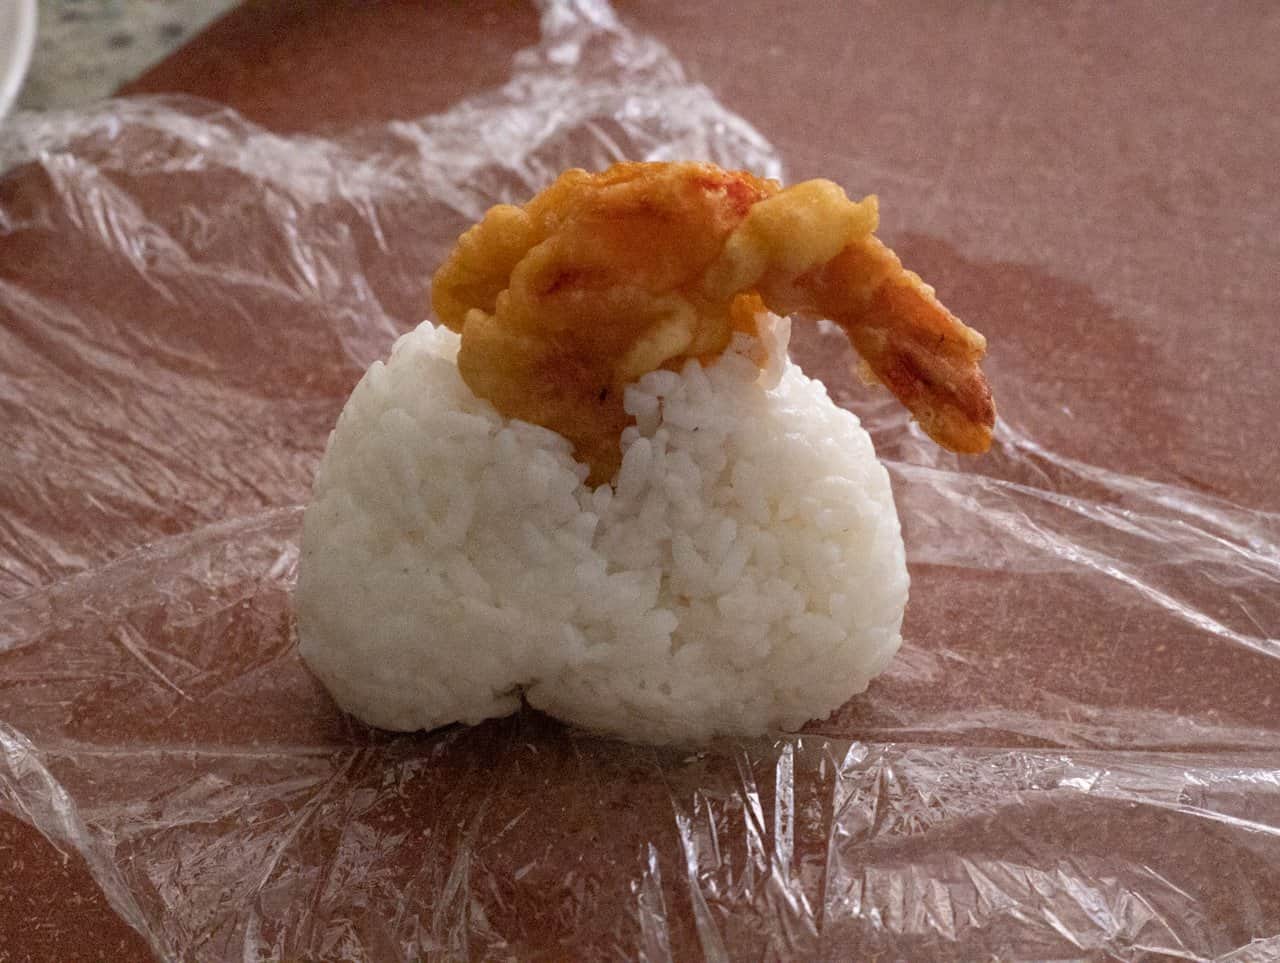 stuff shrimp into rice ball